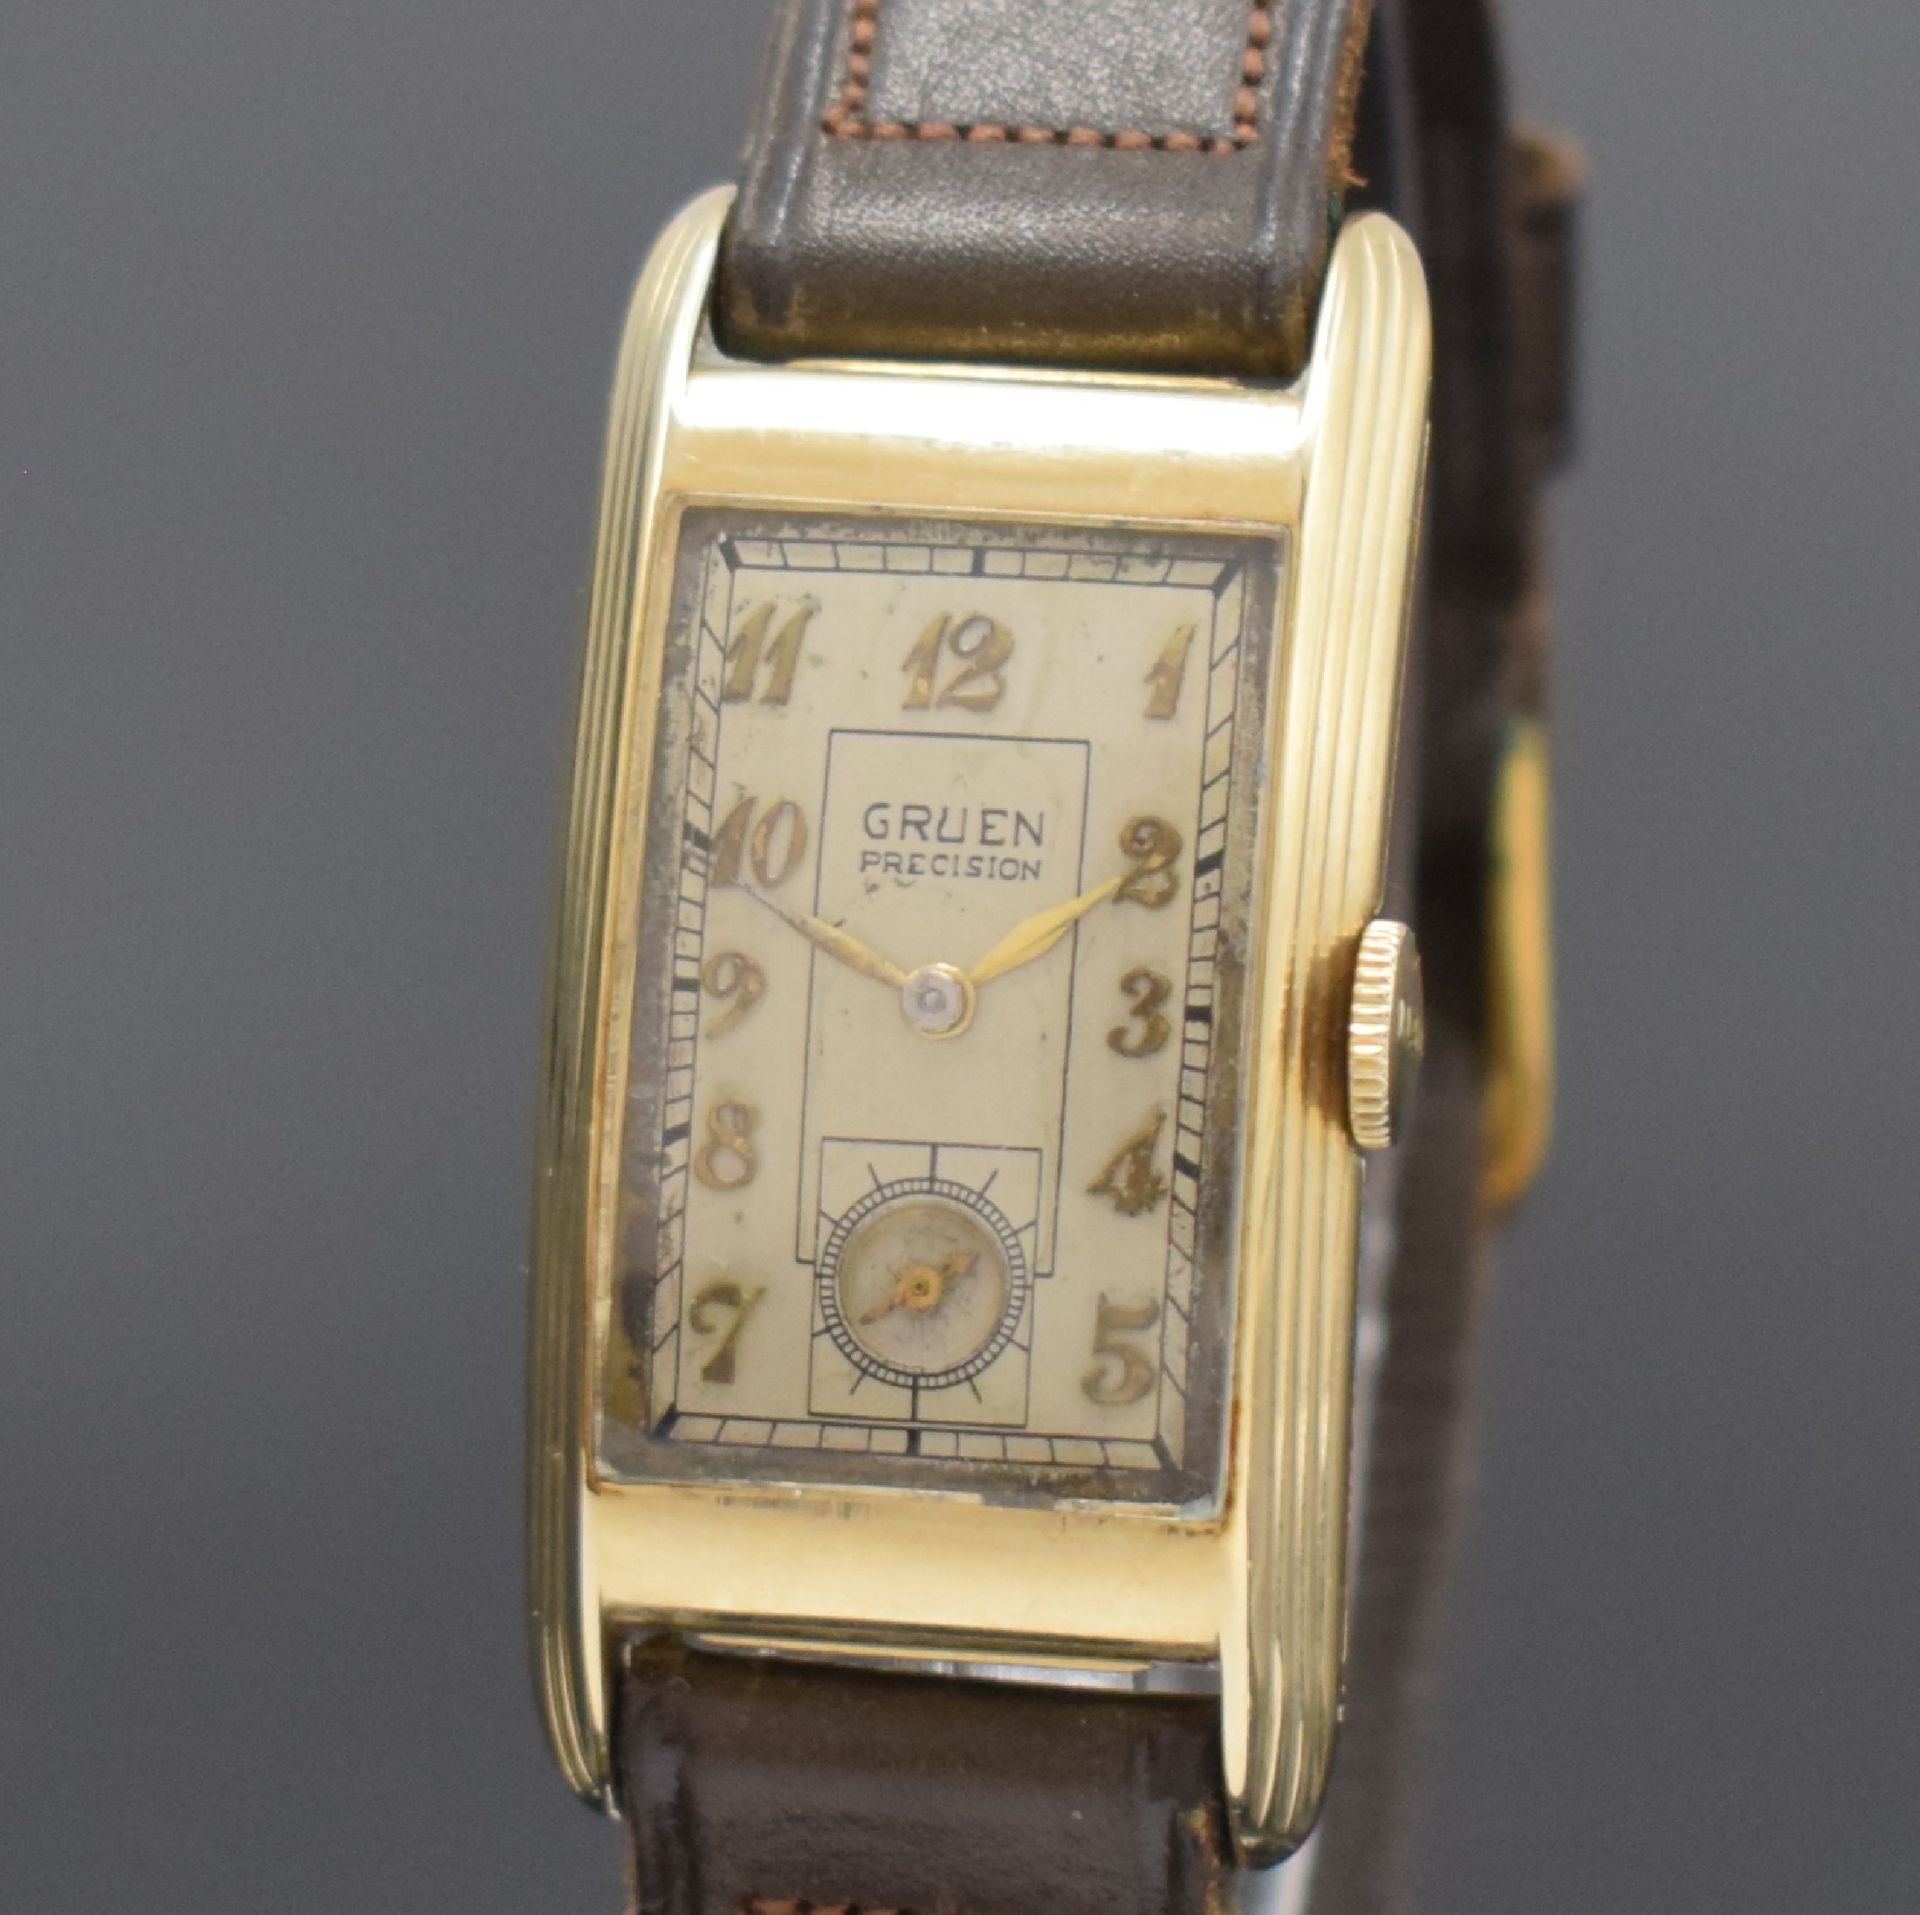 GRUEN Precision rechteckige Armbanduhr in 14k Gelbgold, - Image 2 of 6